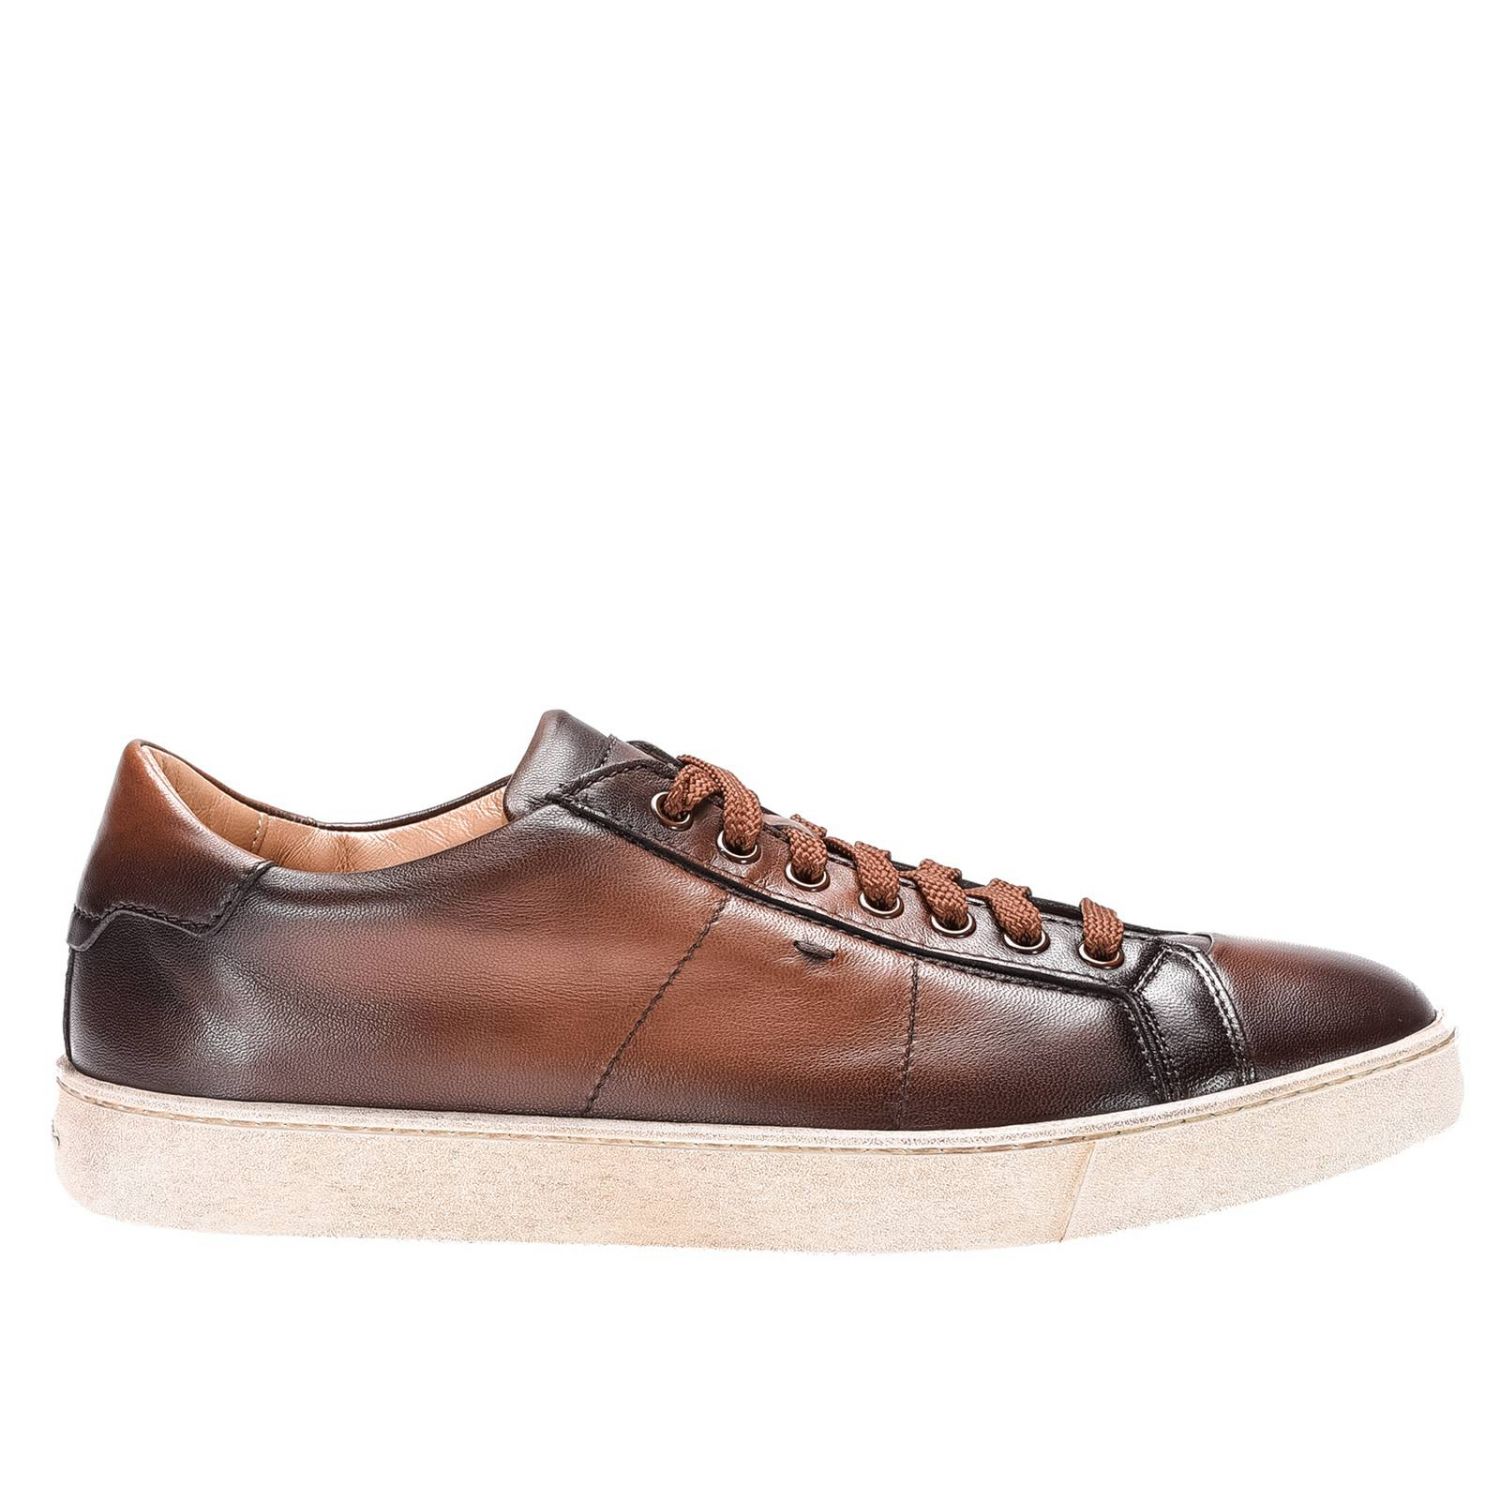 Santoni Outlet: Shoes men | Sneakers Santoni Men Leather | Sneakers ...